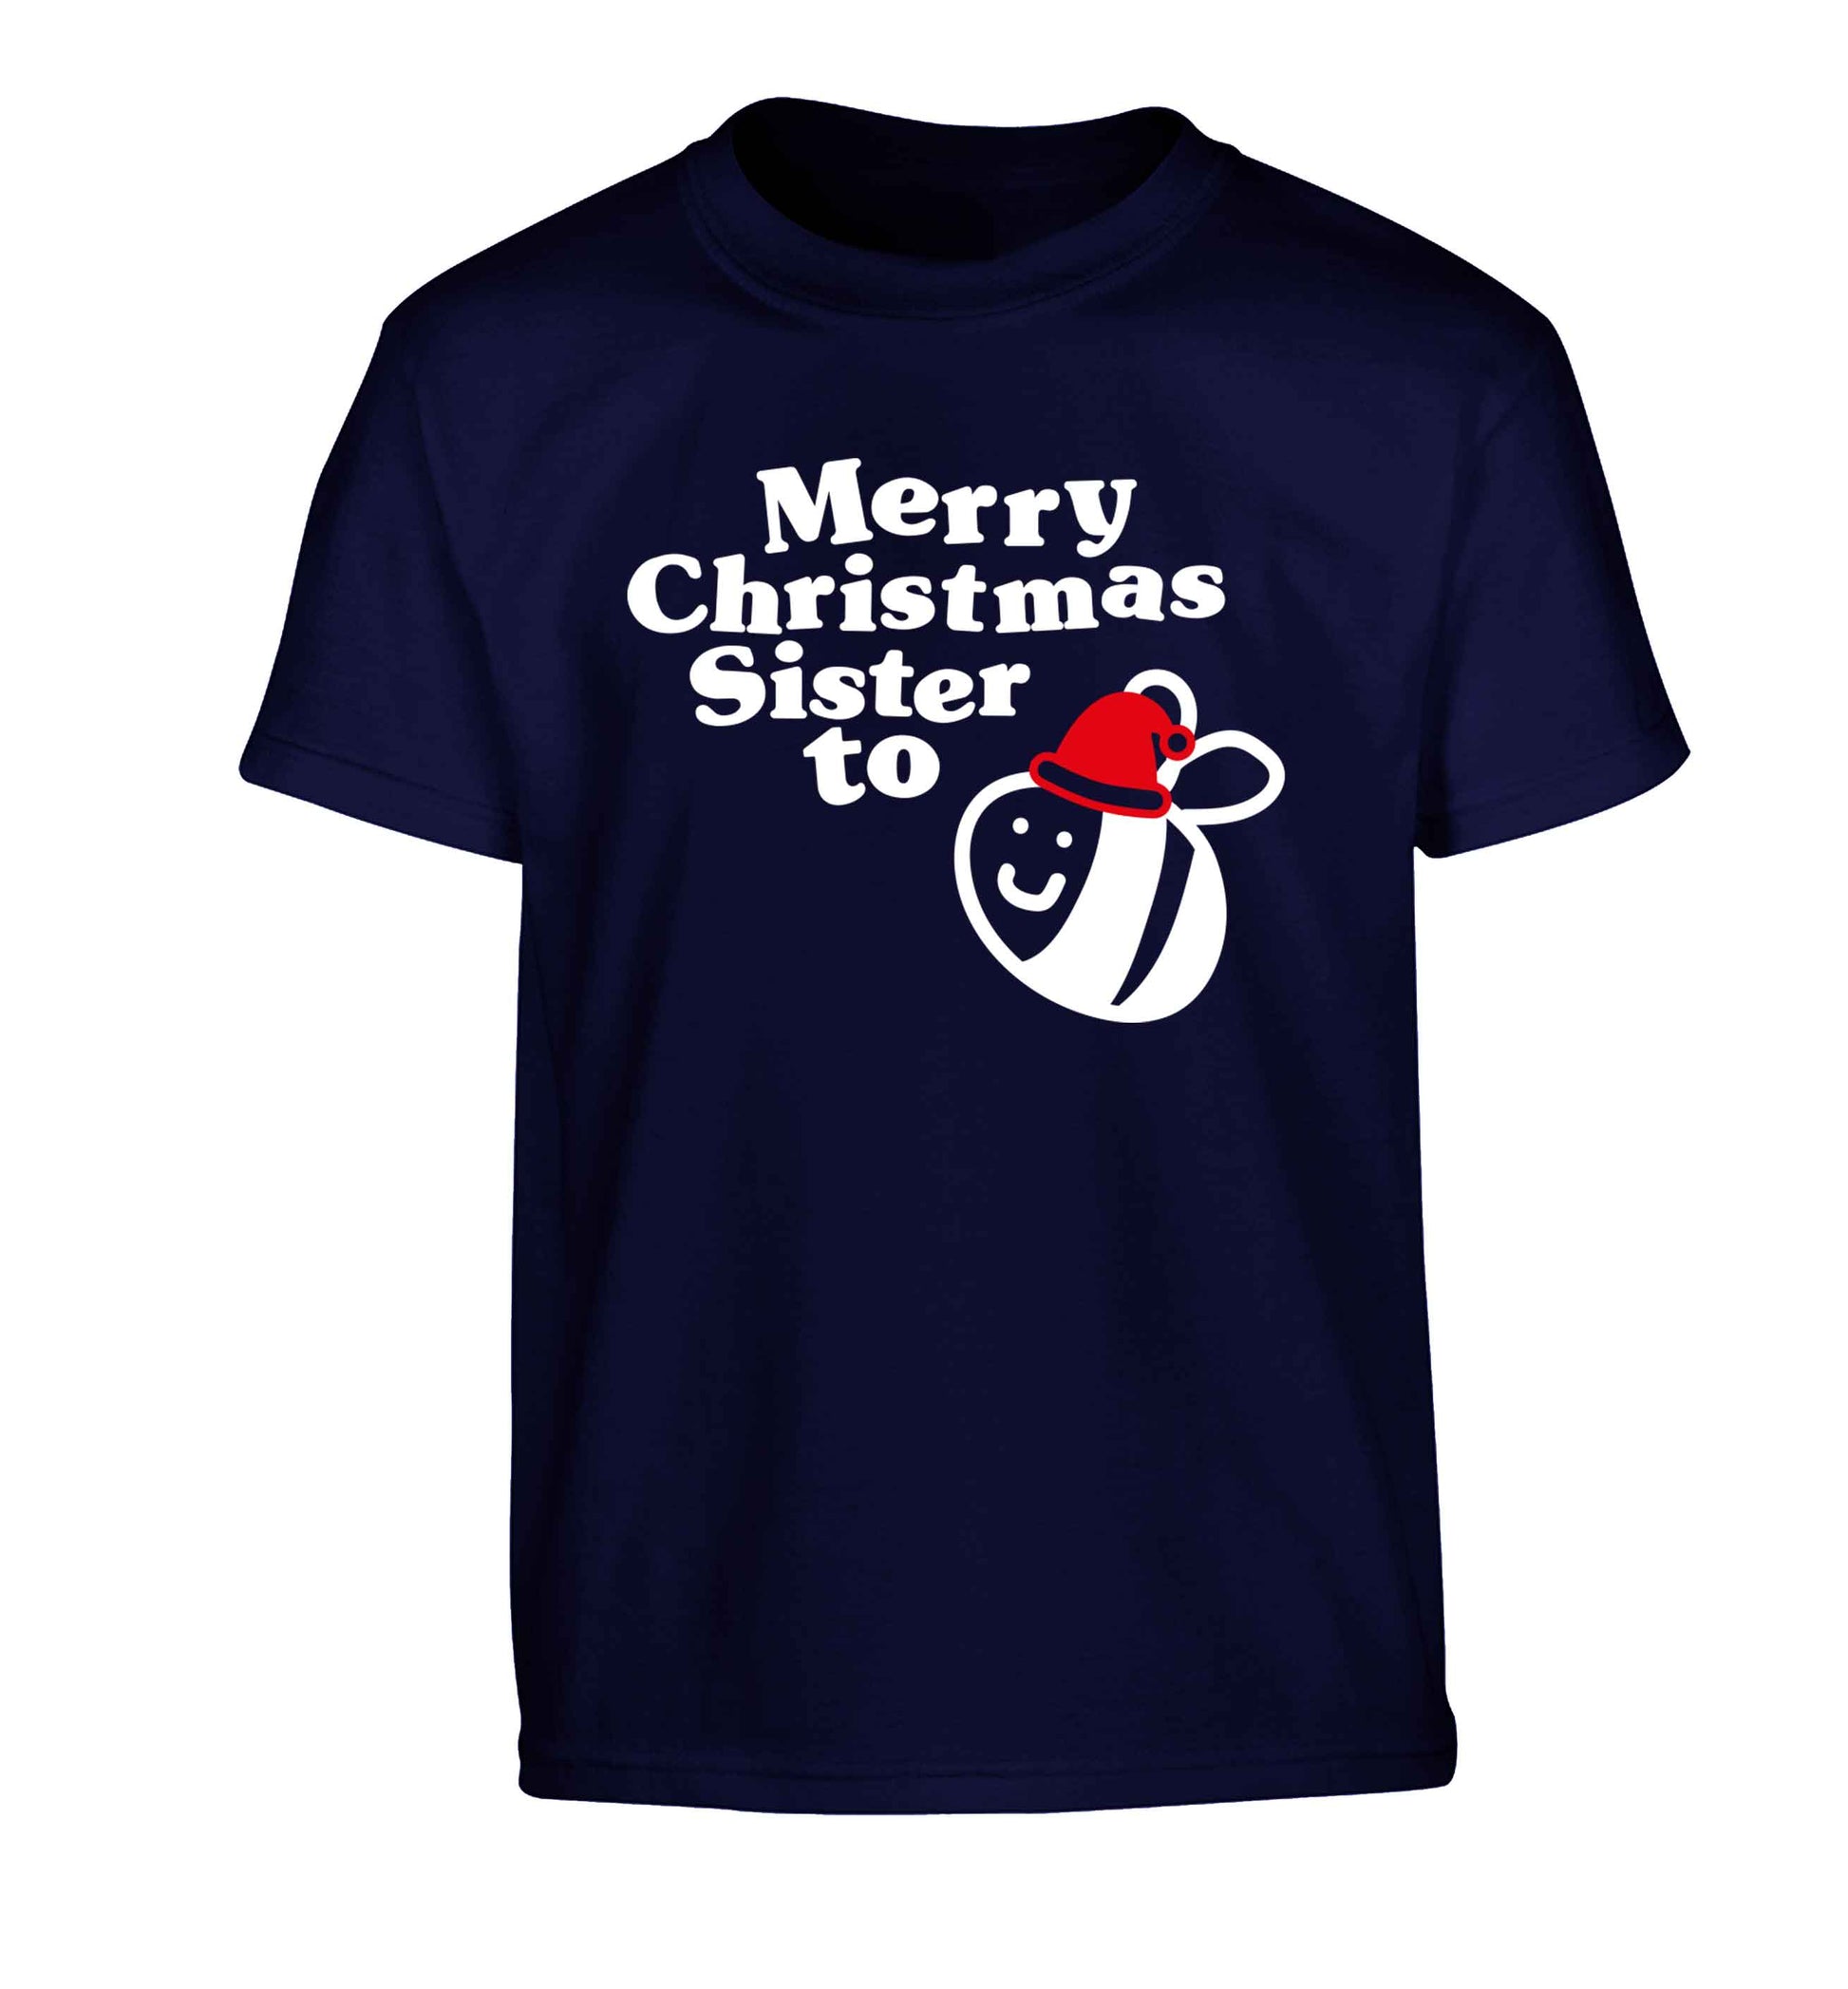 Merry Christmas sister to be Children's navy Tshirt 12-13 Years